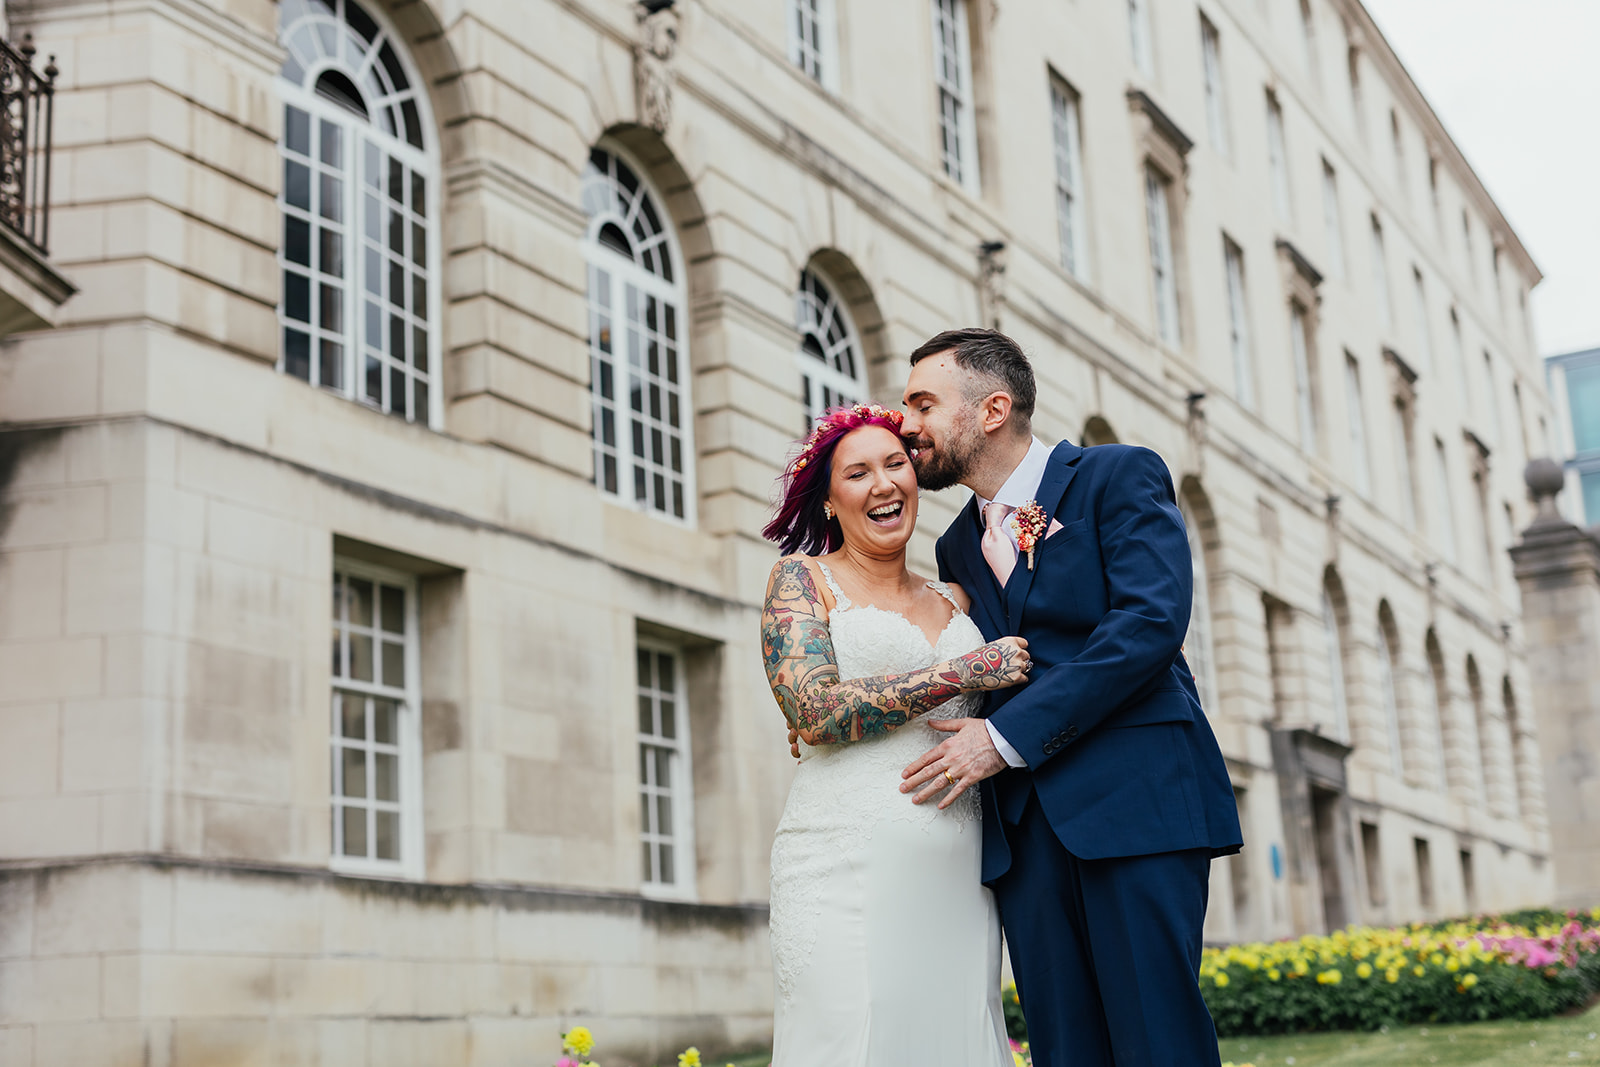 Leeds Civic Hall Elopement Wedding Photography